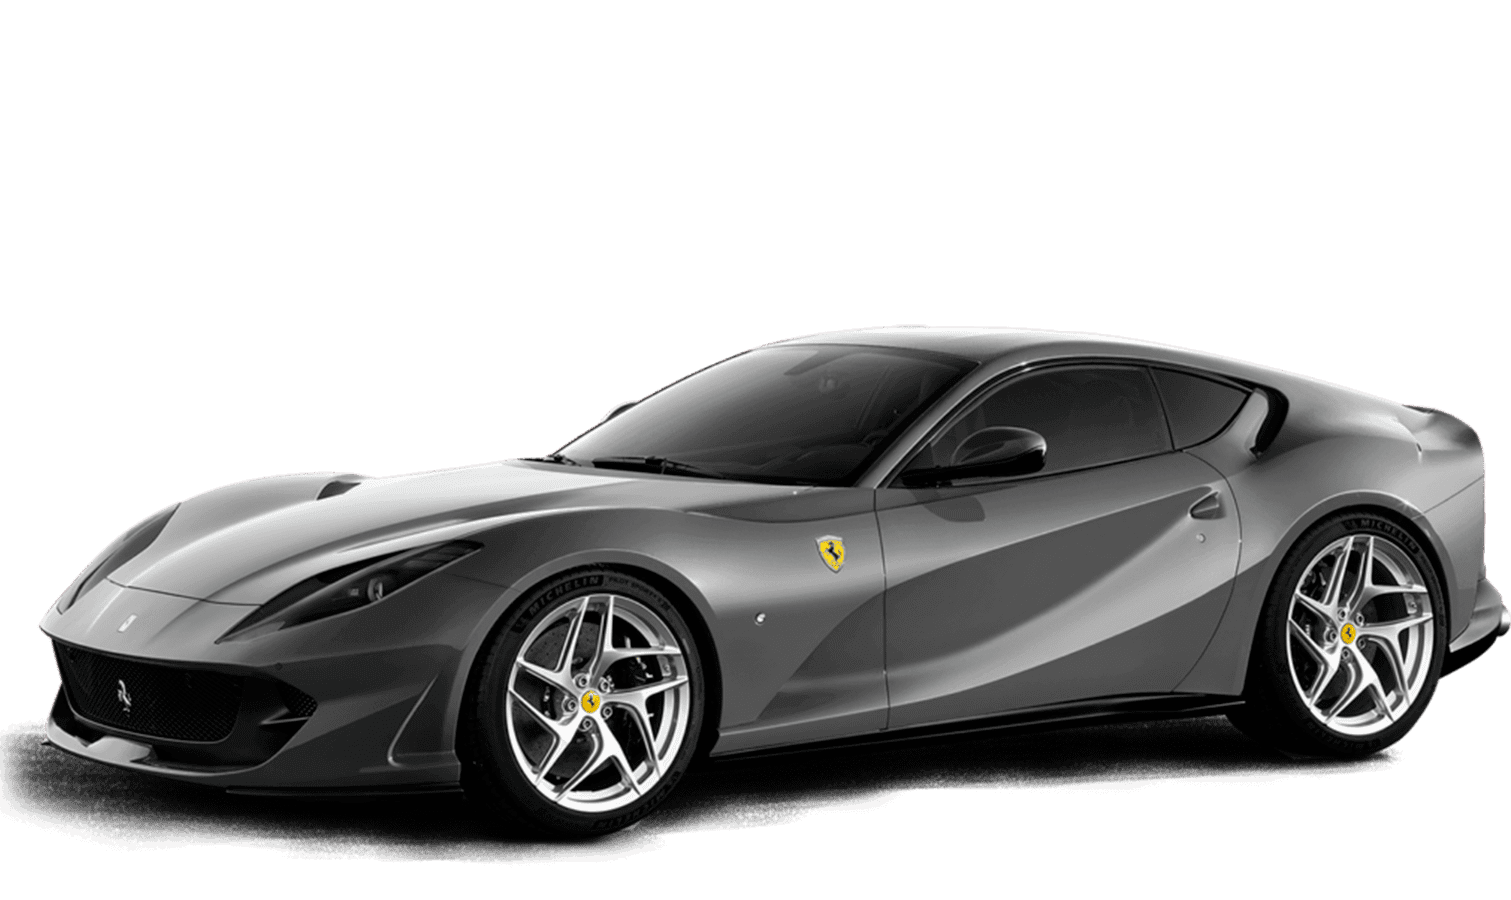 Ferrari 812 Superfast, High-end, sports and luxury car rental